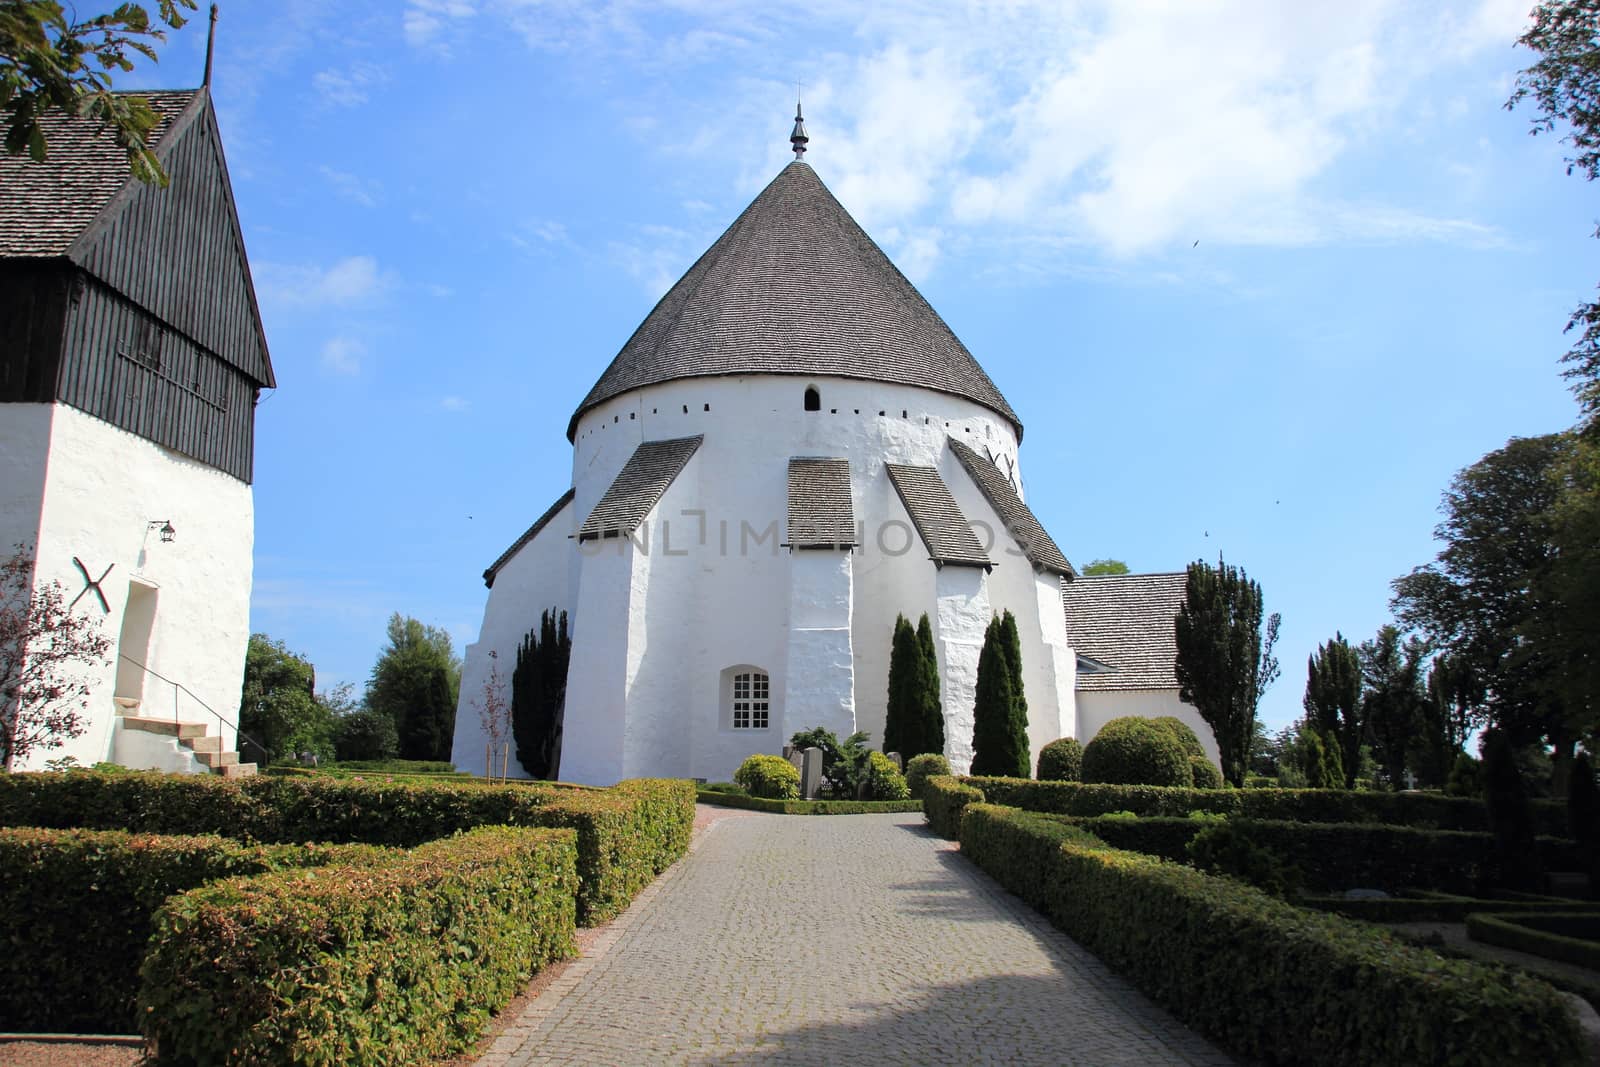 Old round church at Bornholm Denmark